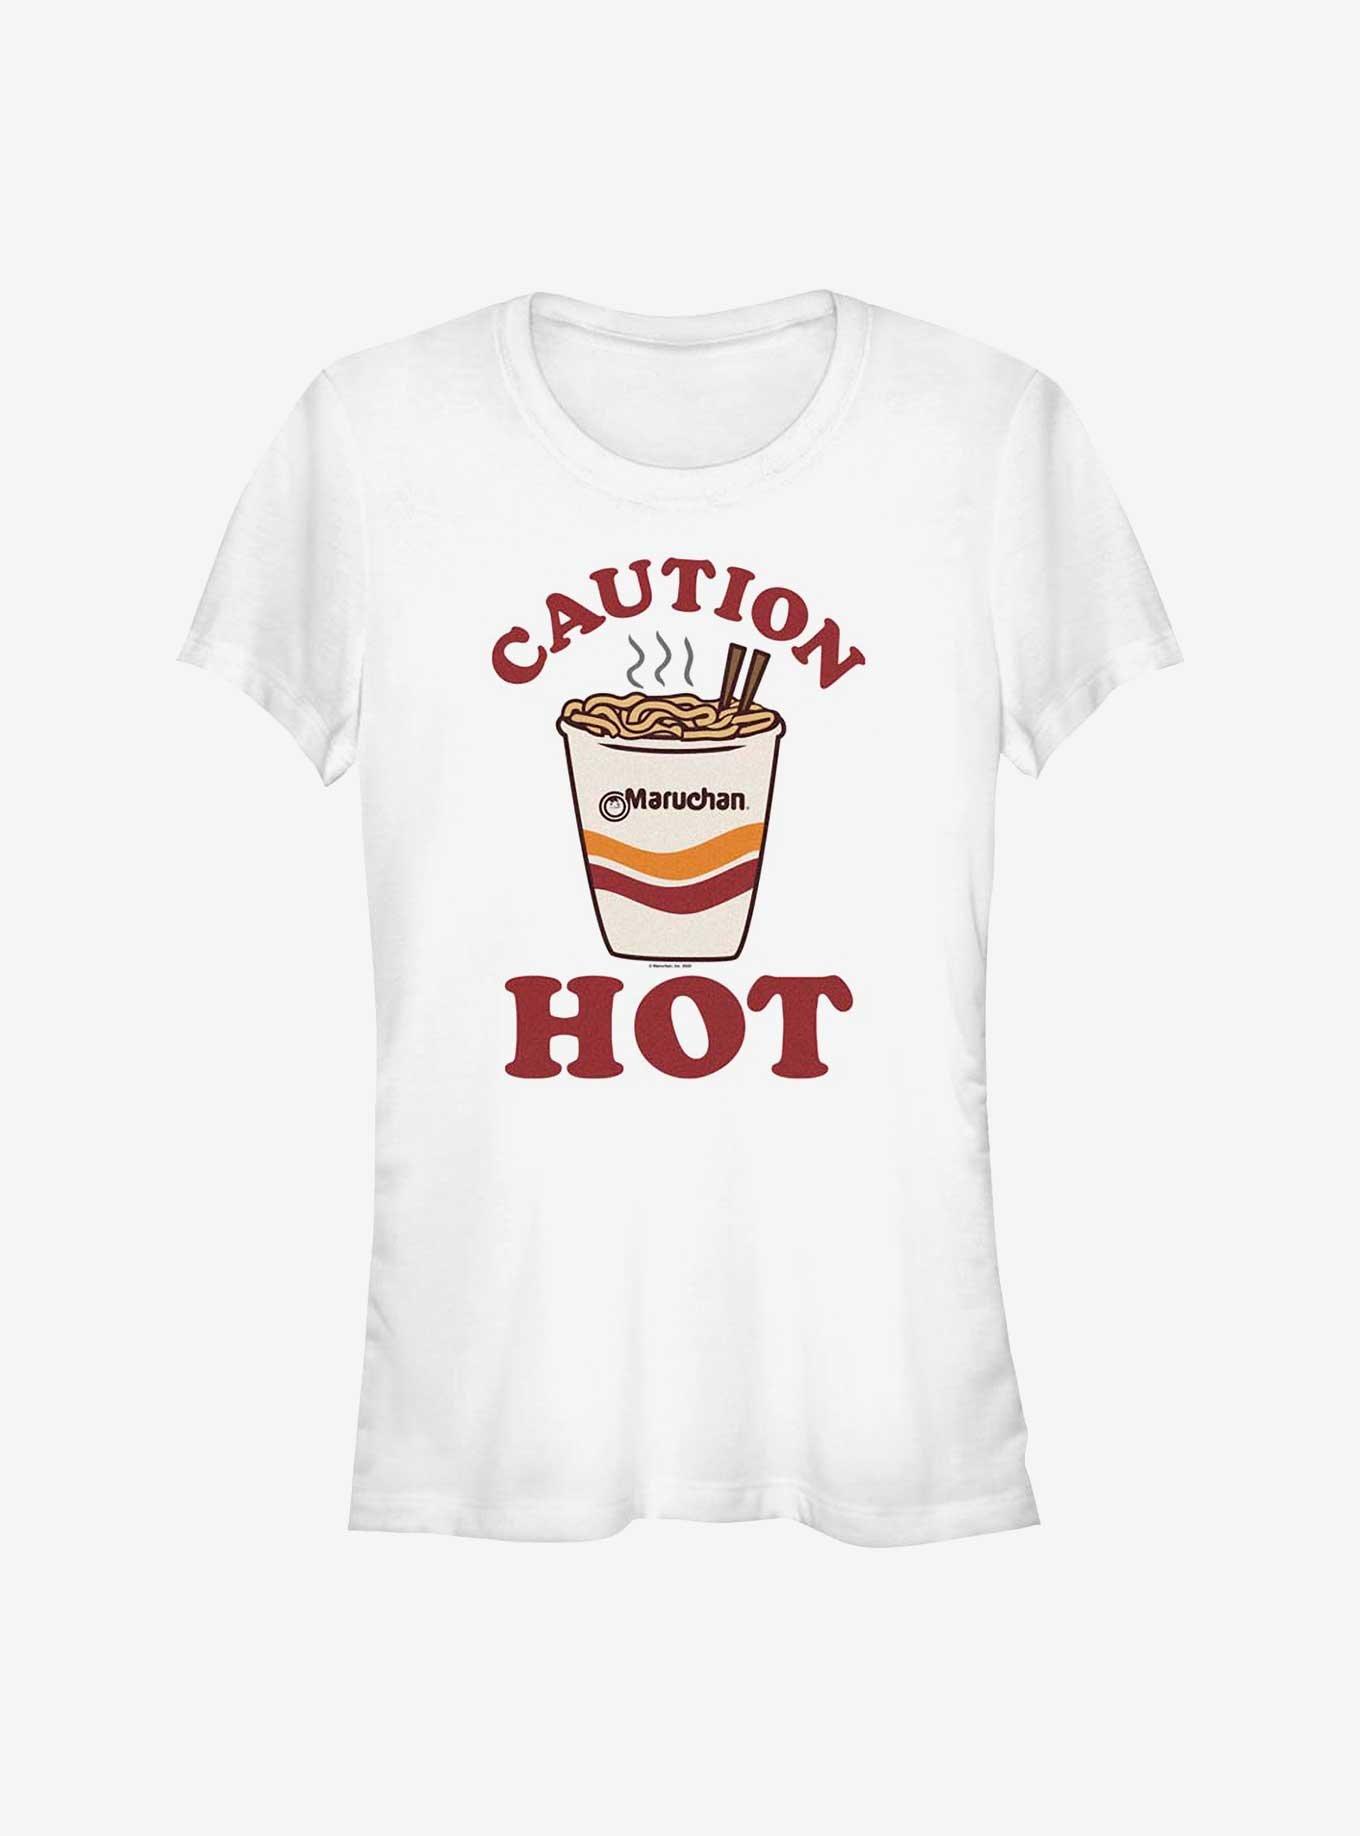 Maruchan Caution Hot Girls T-Shirt, WHITE, hi-res